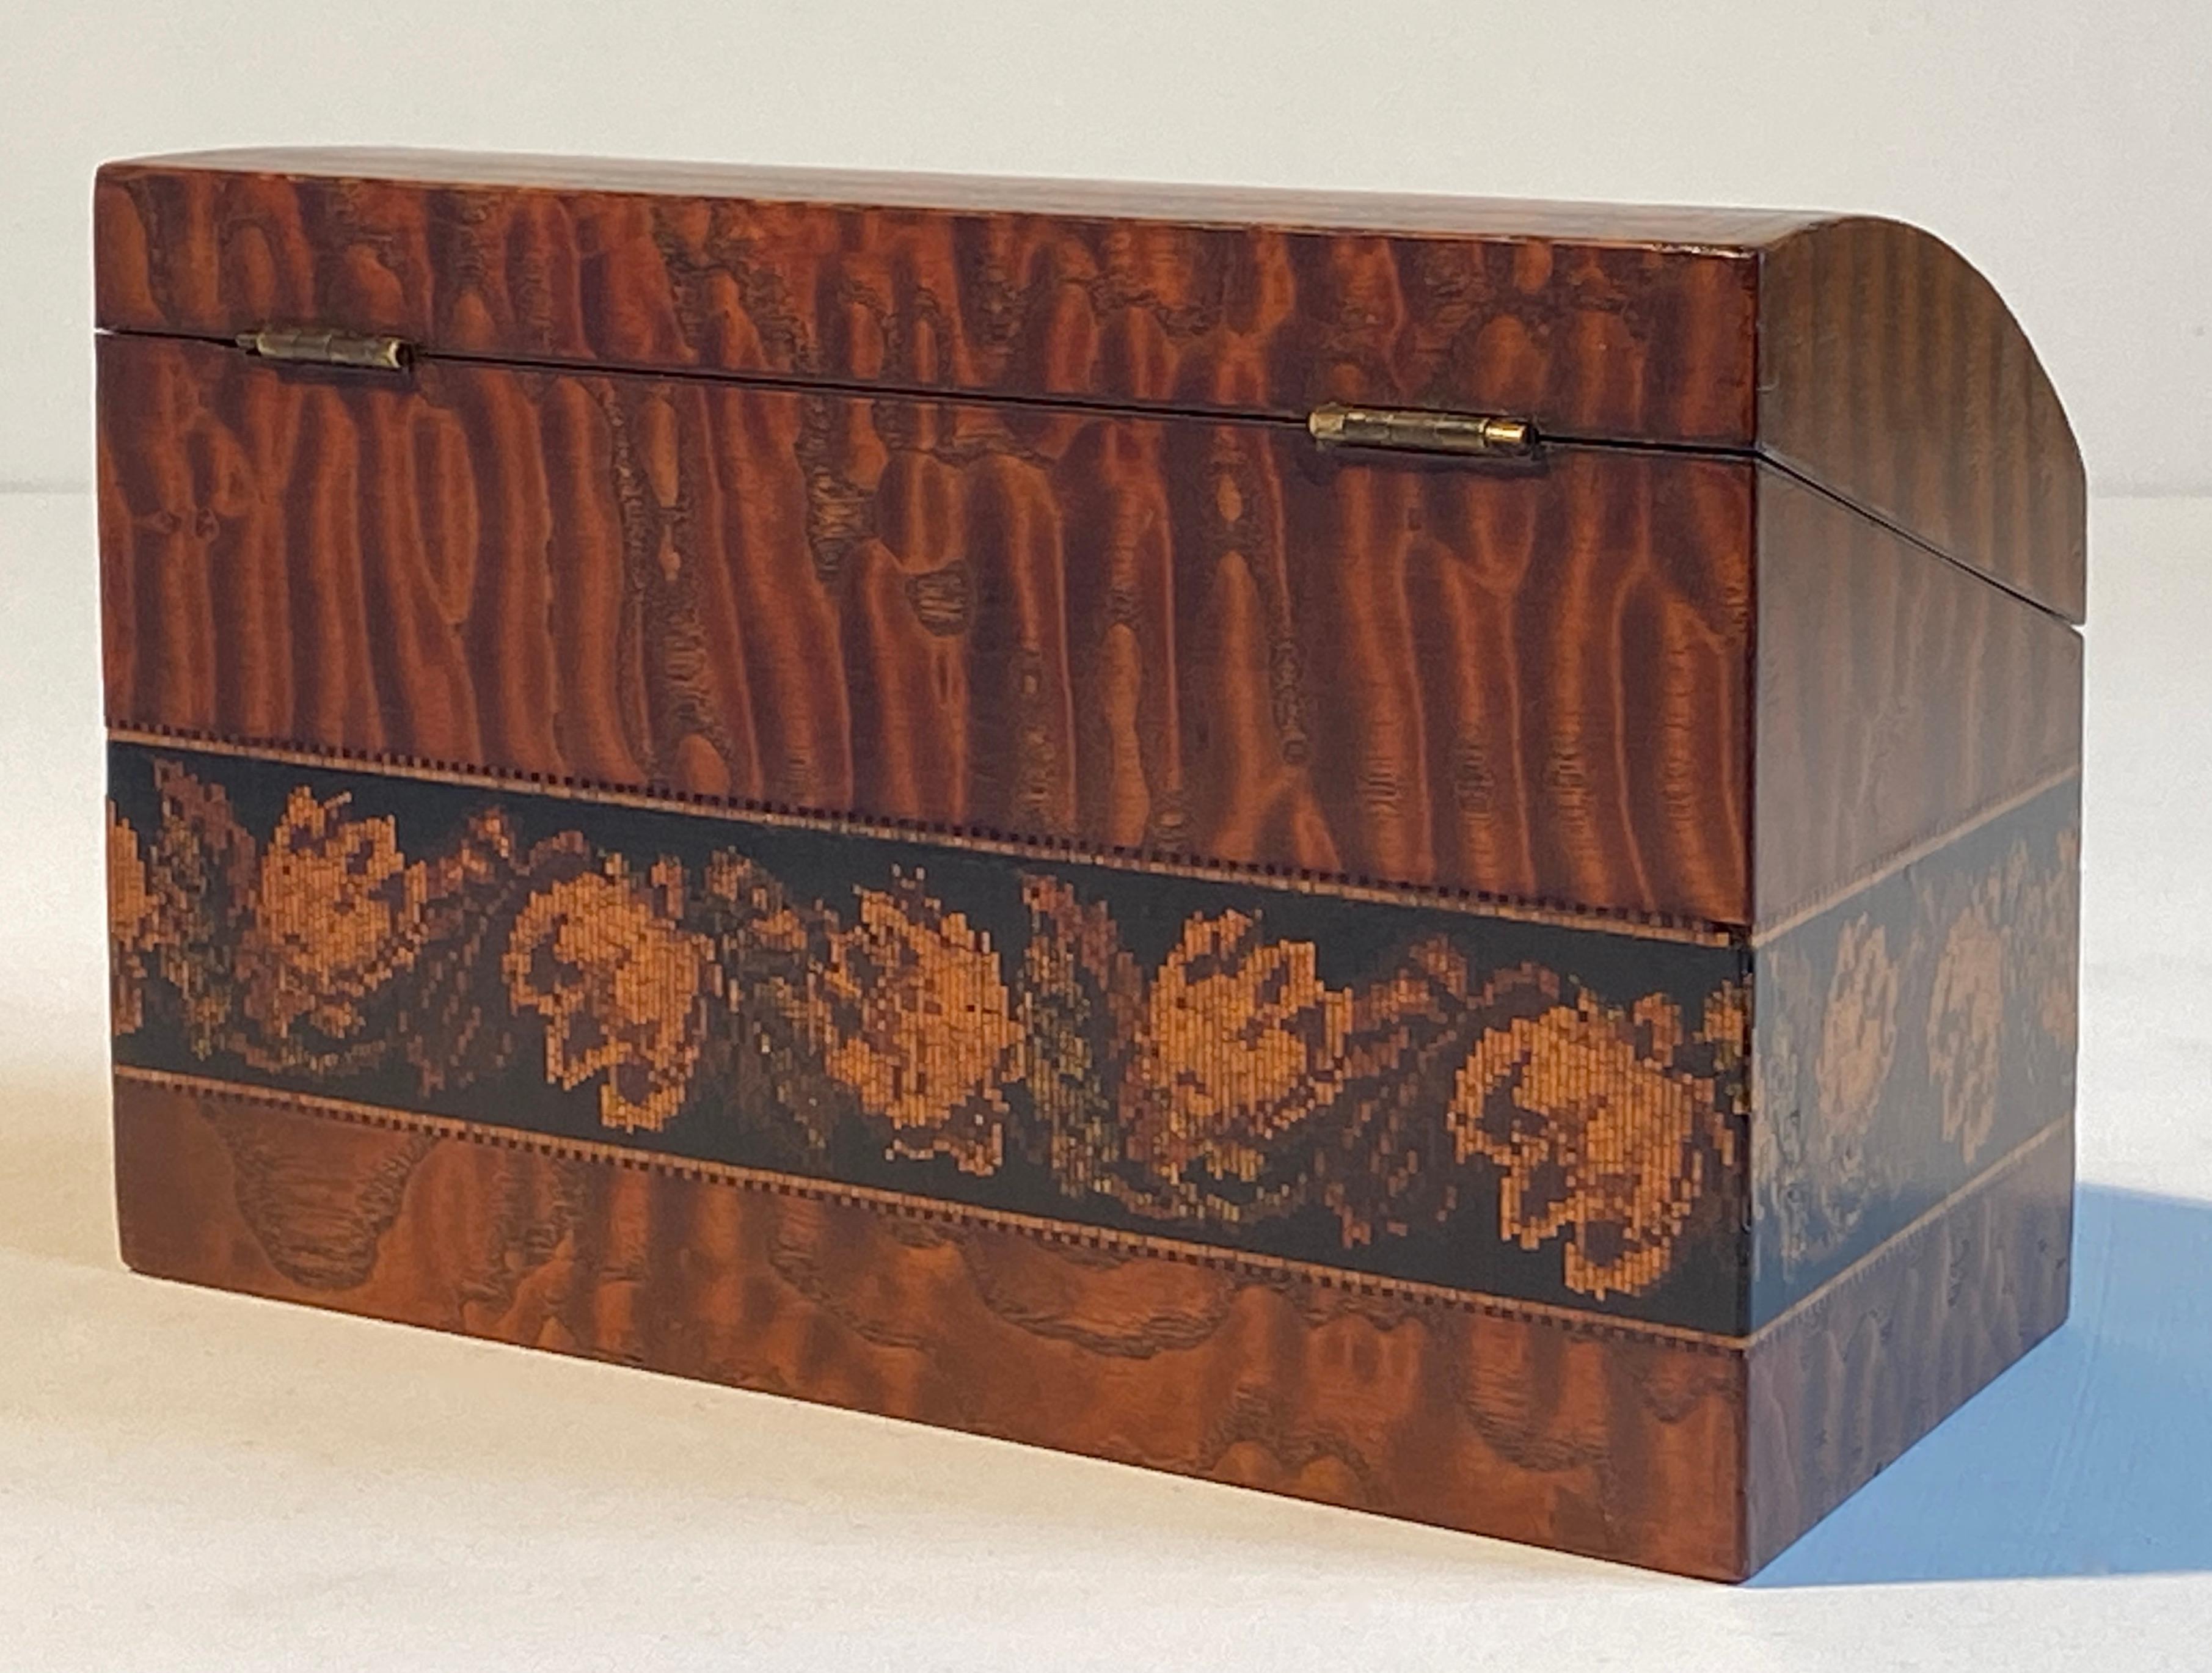 Tunbridge Ware Correspondence Box by Edmund Nye 19th Century In Good Condition For Sale In Cheltenham, GB